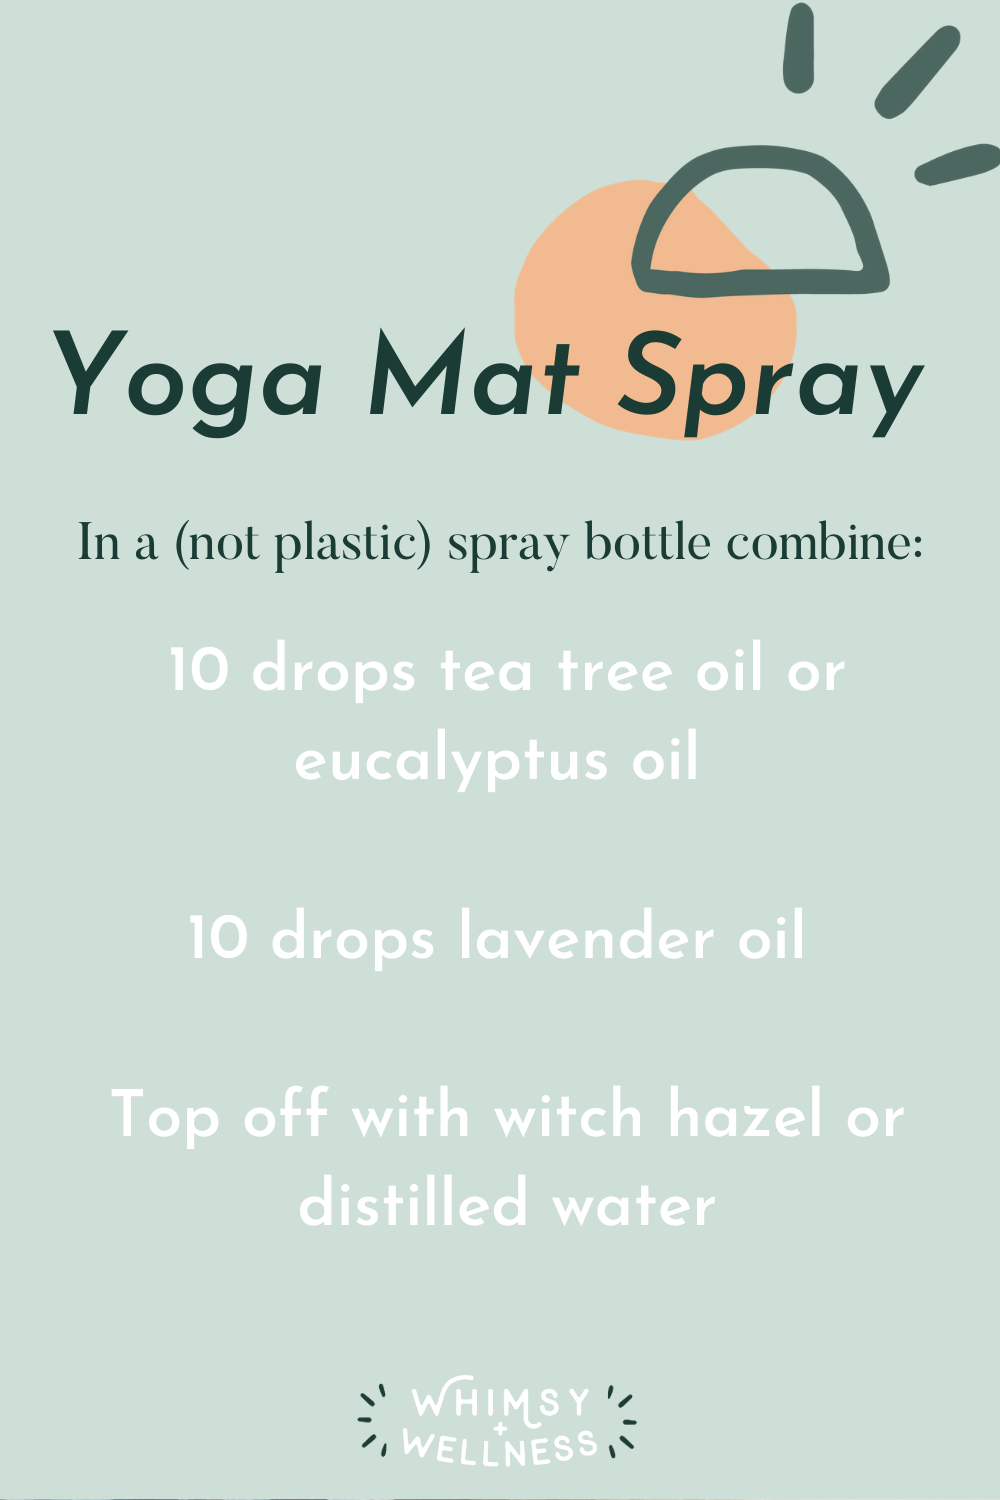 Yoga Mat Spray with essential oils